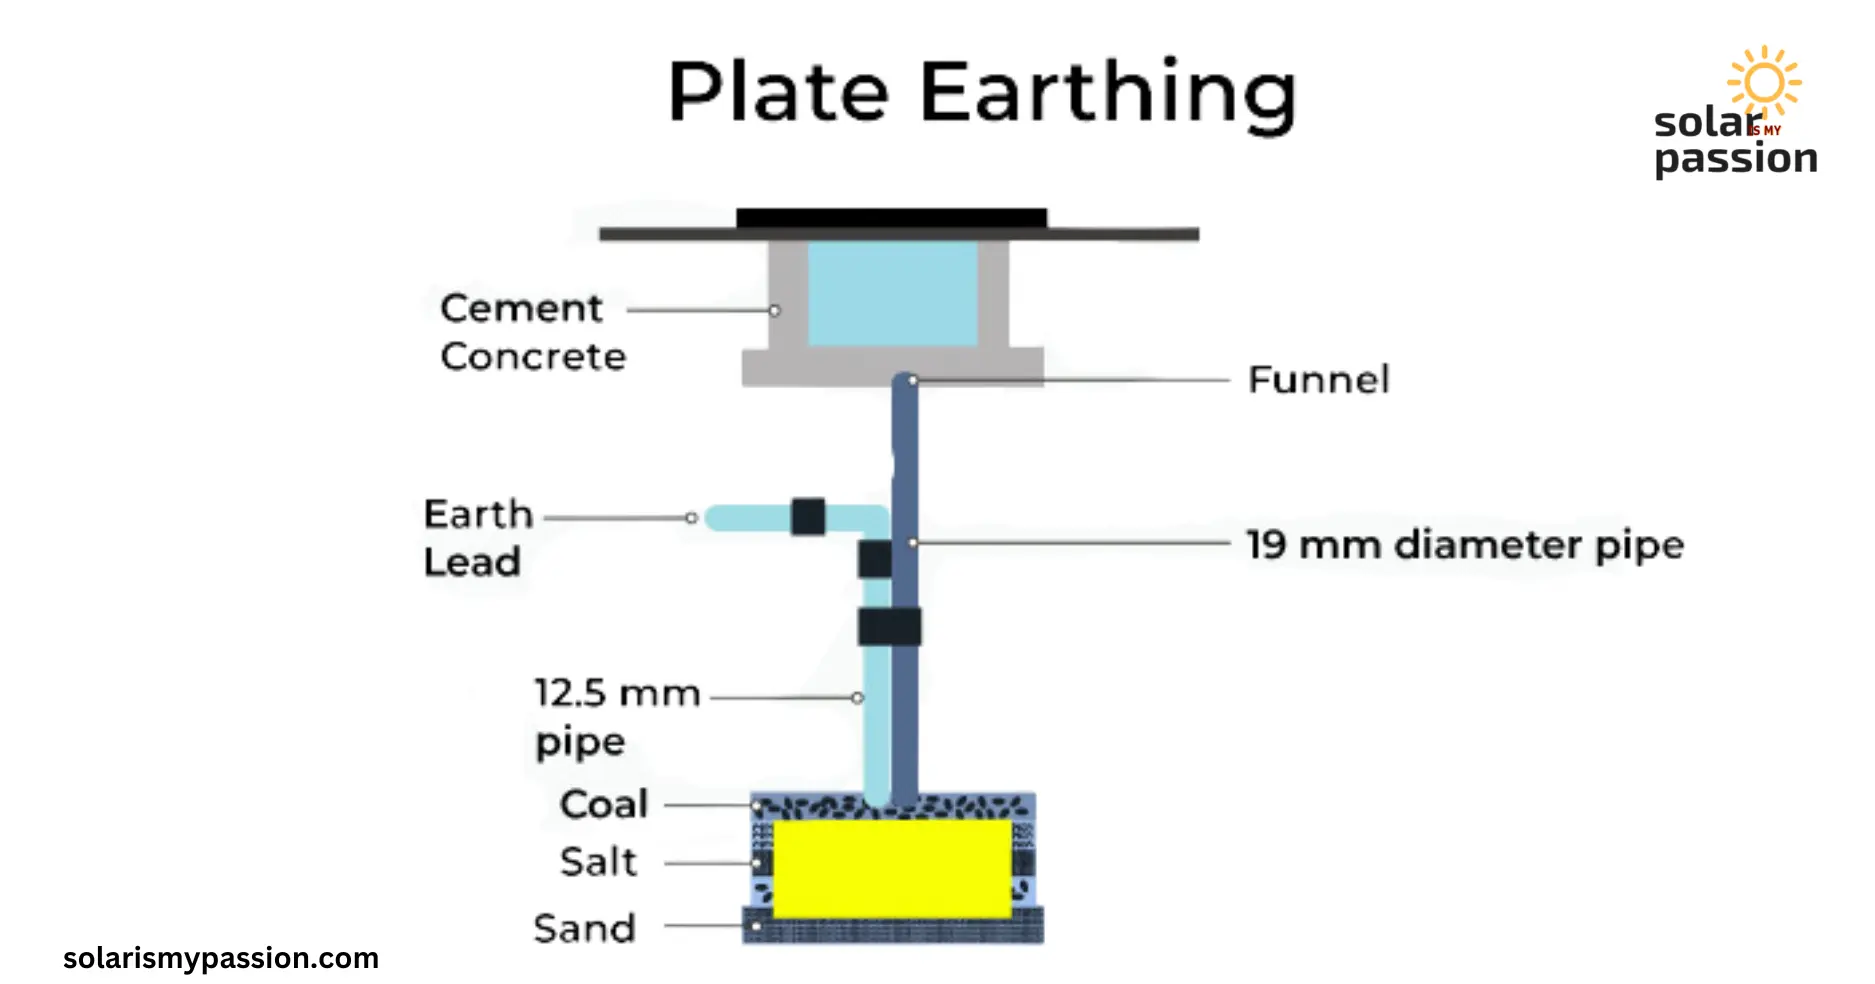 Plate Earthing